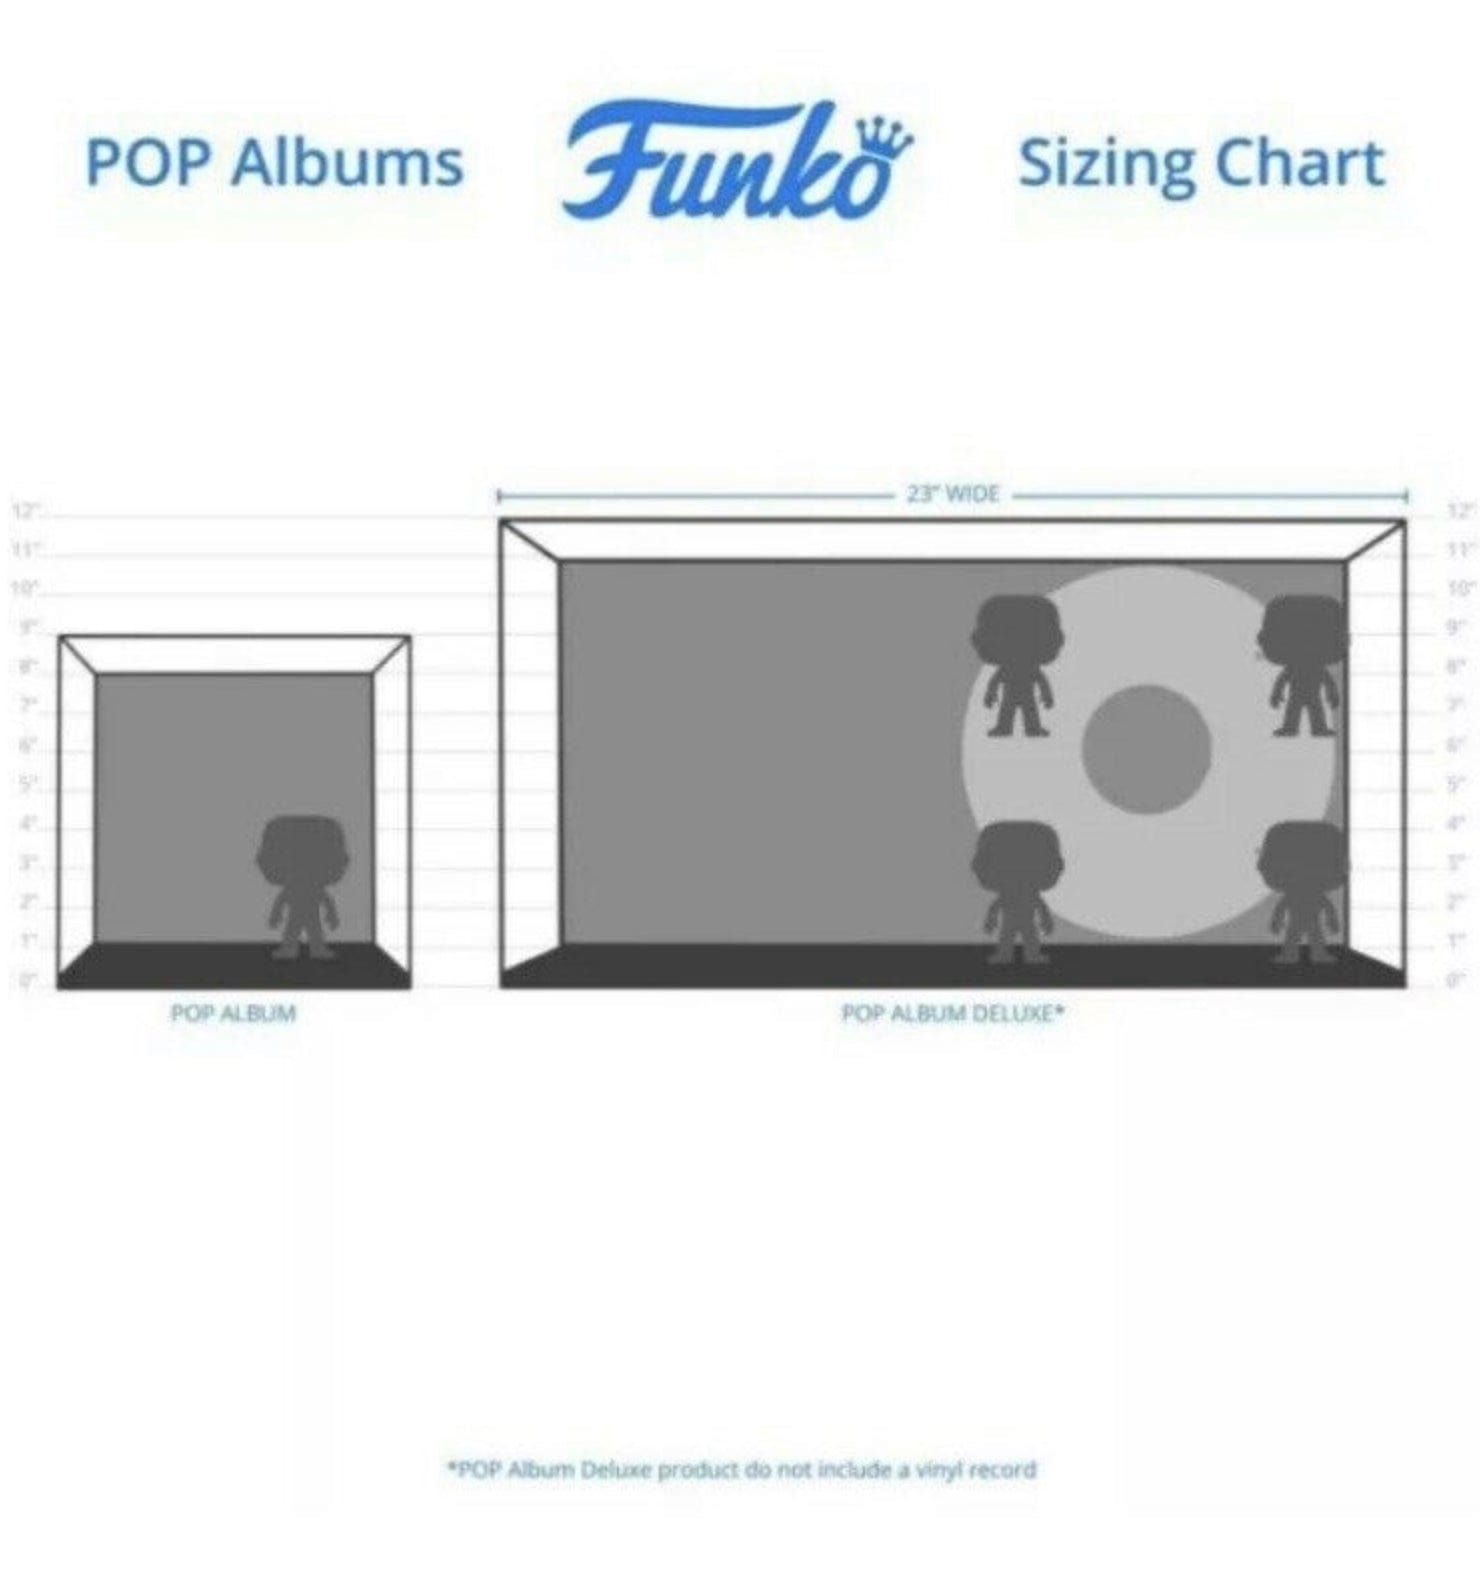 QUEEN GREATEST HITS DELUXE EXCLUSIVE FUNKO POP ALBUMS COVER ROCKS #21